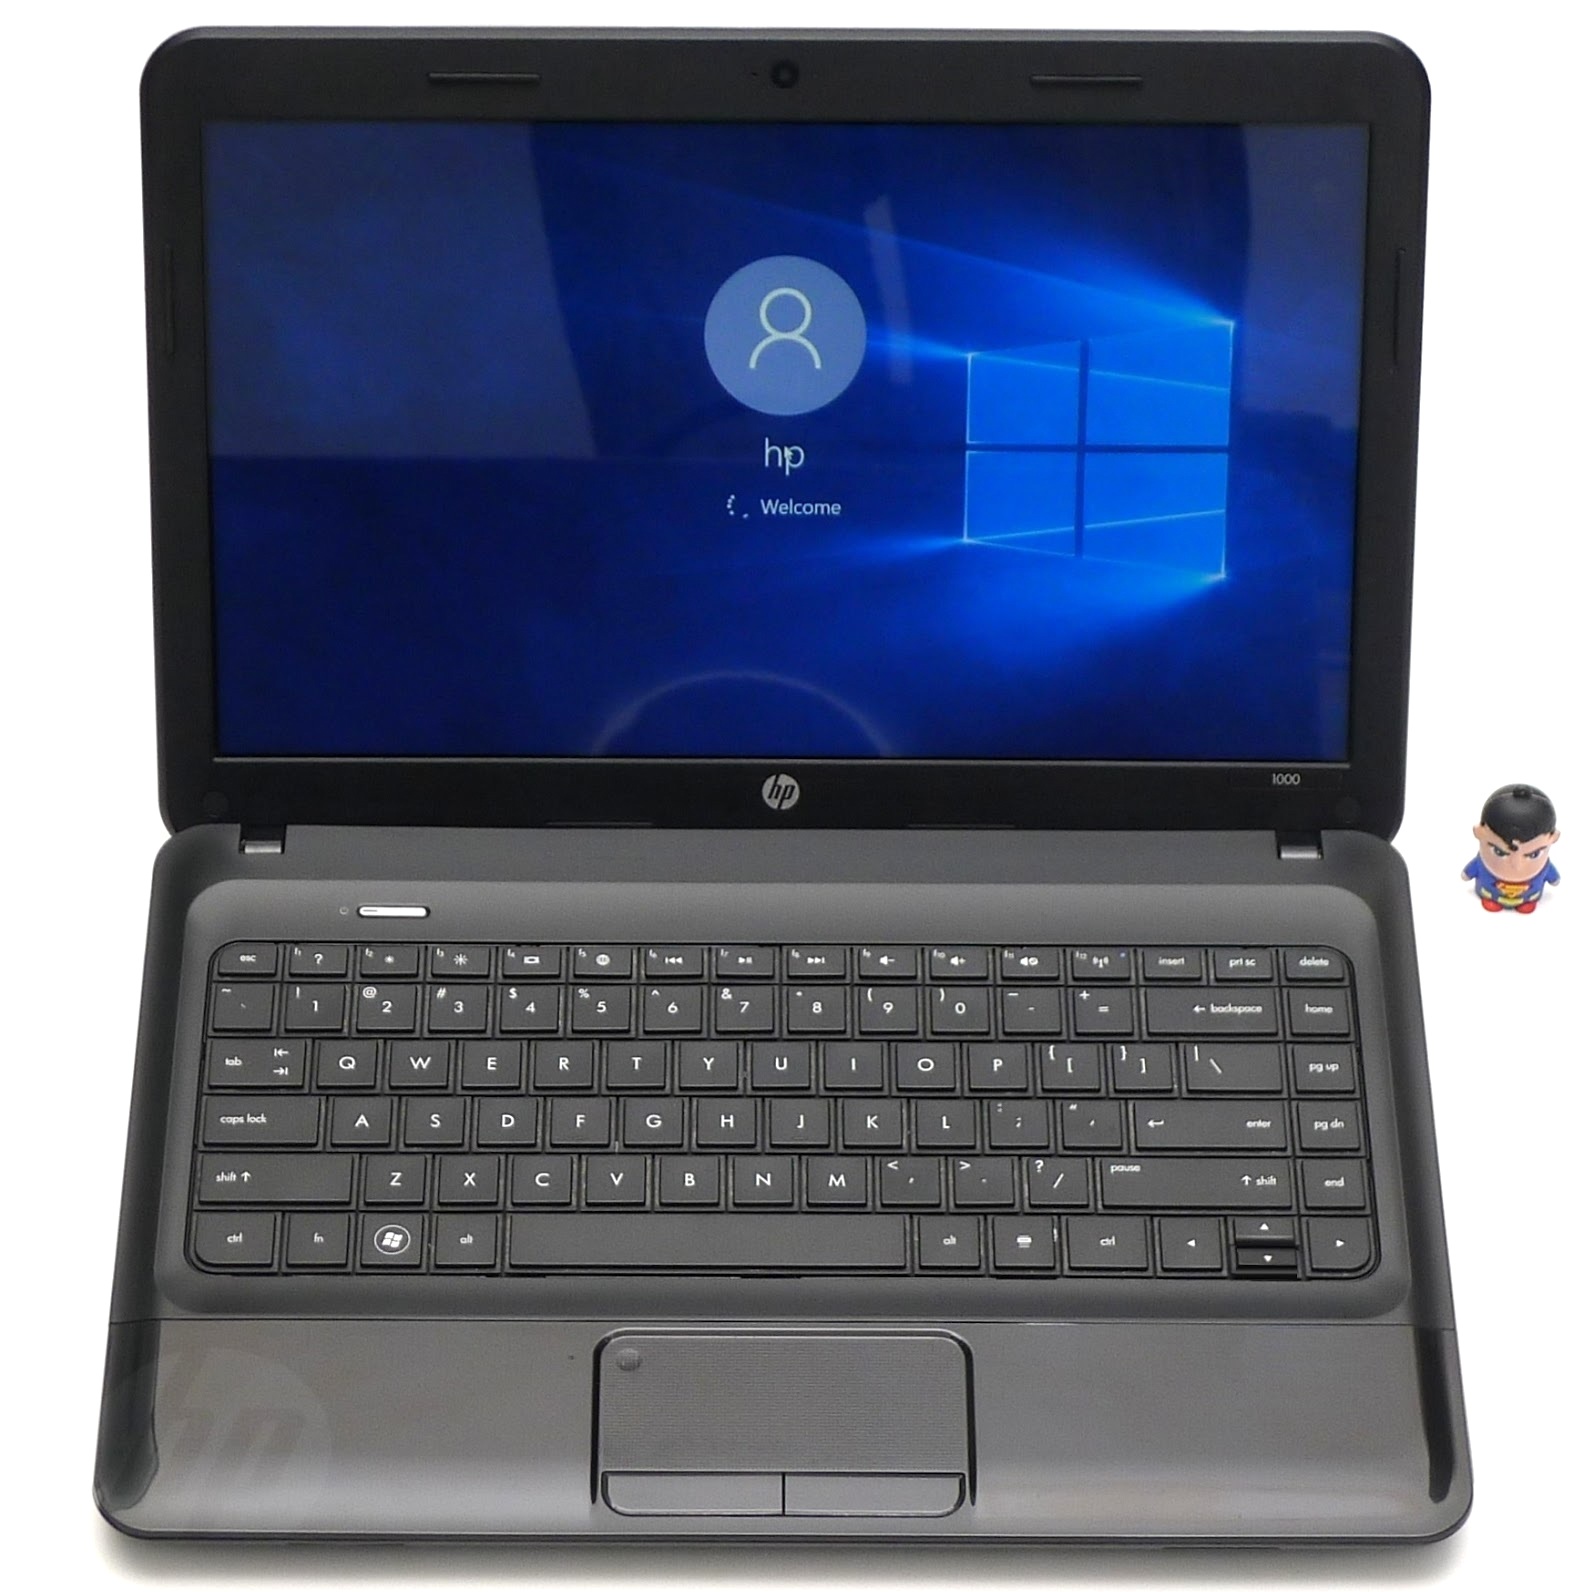 Jual Laptop HP 1000 Intel Celeron Series Second | Jual Beli Laptop